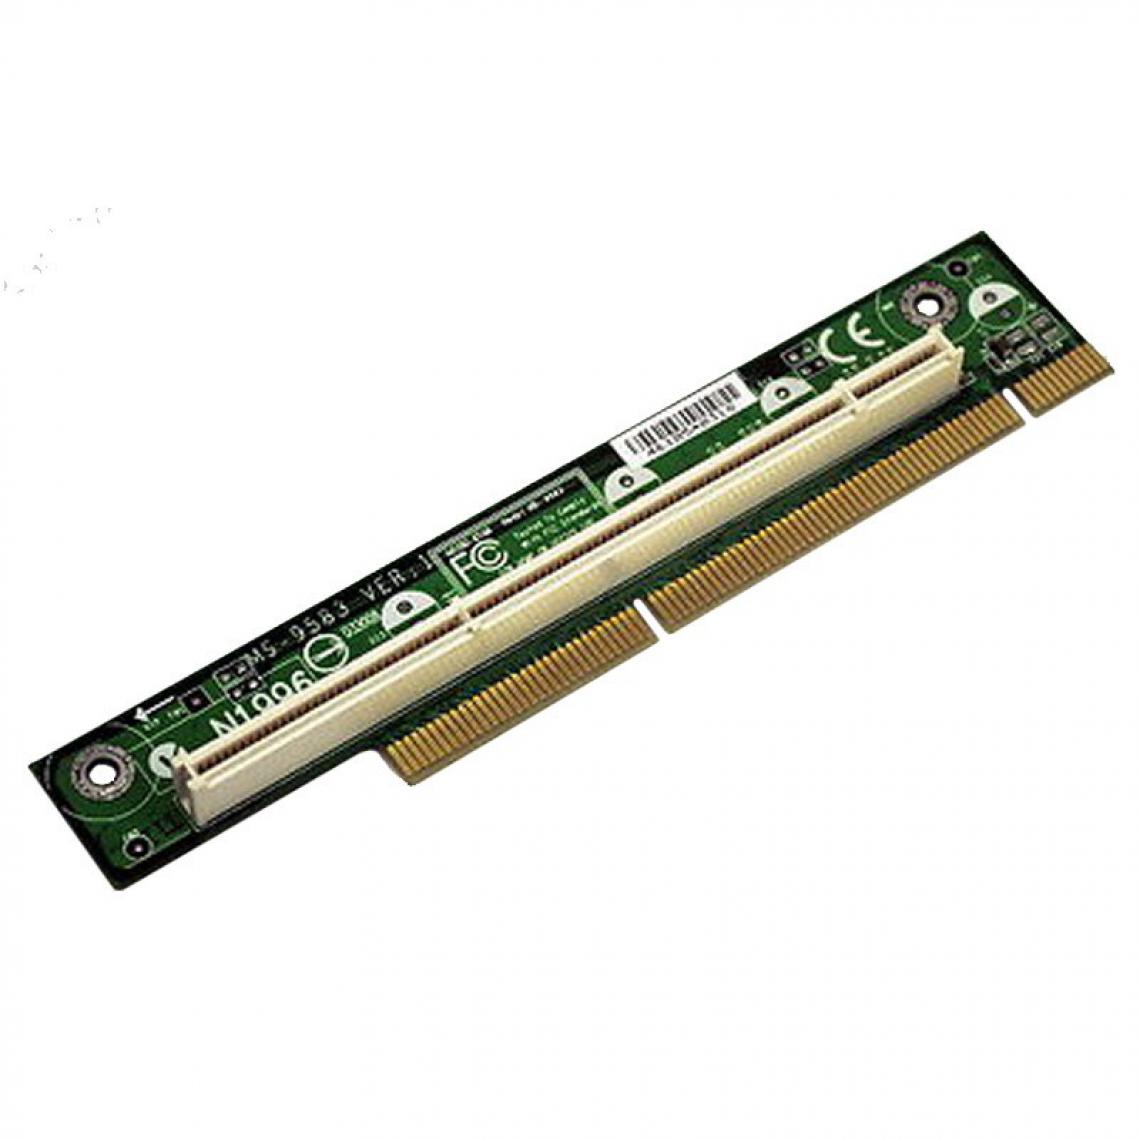 Micro-Star - Carte PCI-X Riser Card Micro-Star MS-9583 VER:1 1x PCI-Express - Carte Contrôleur USB